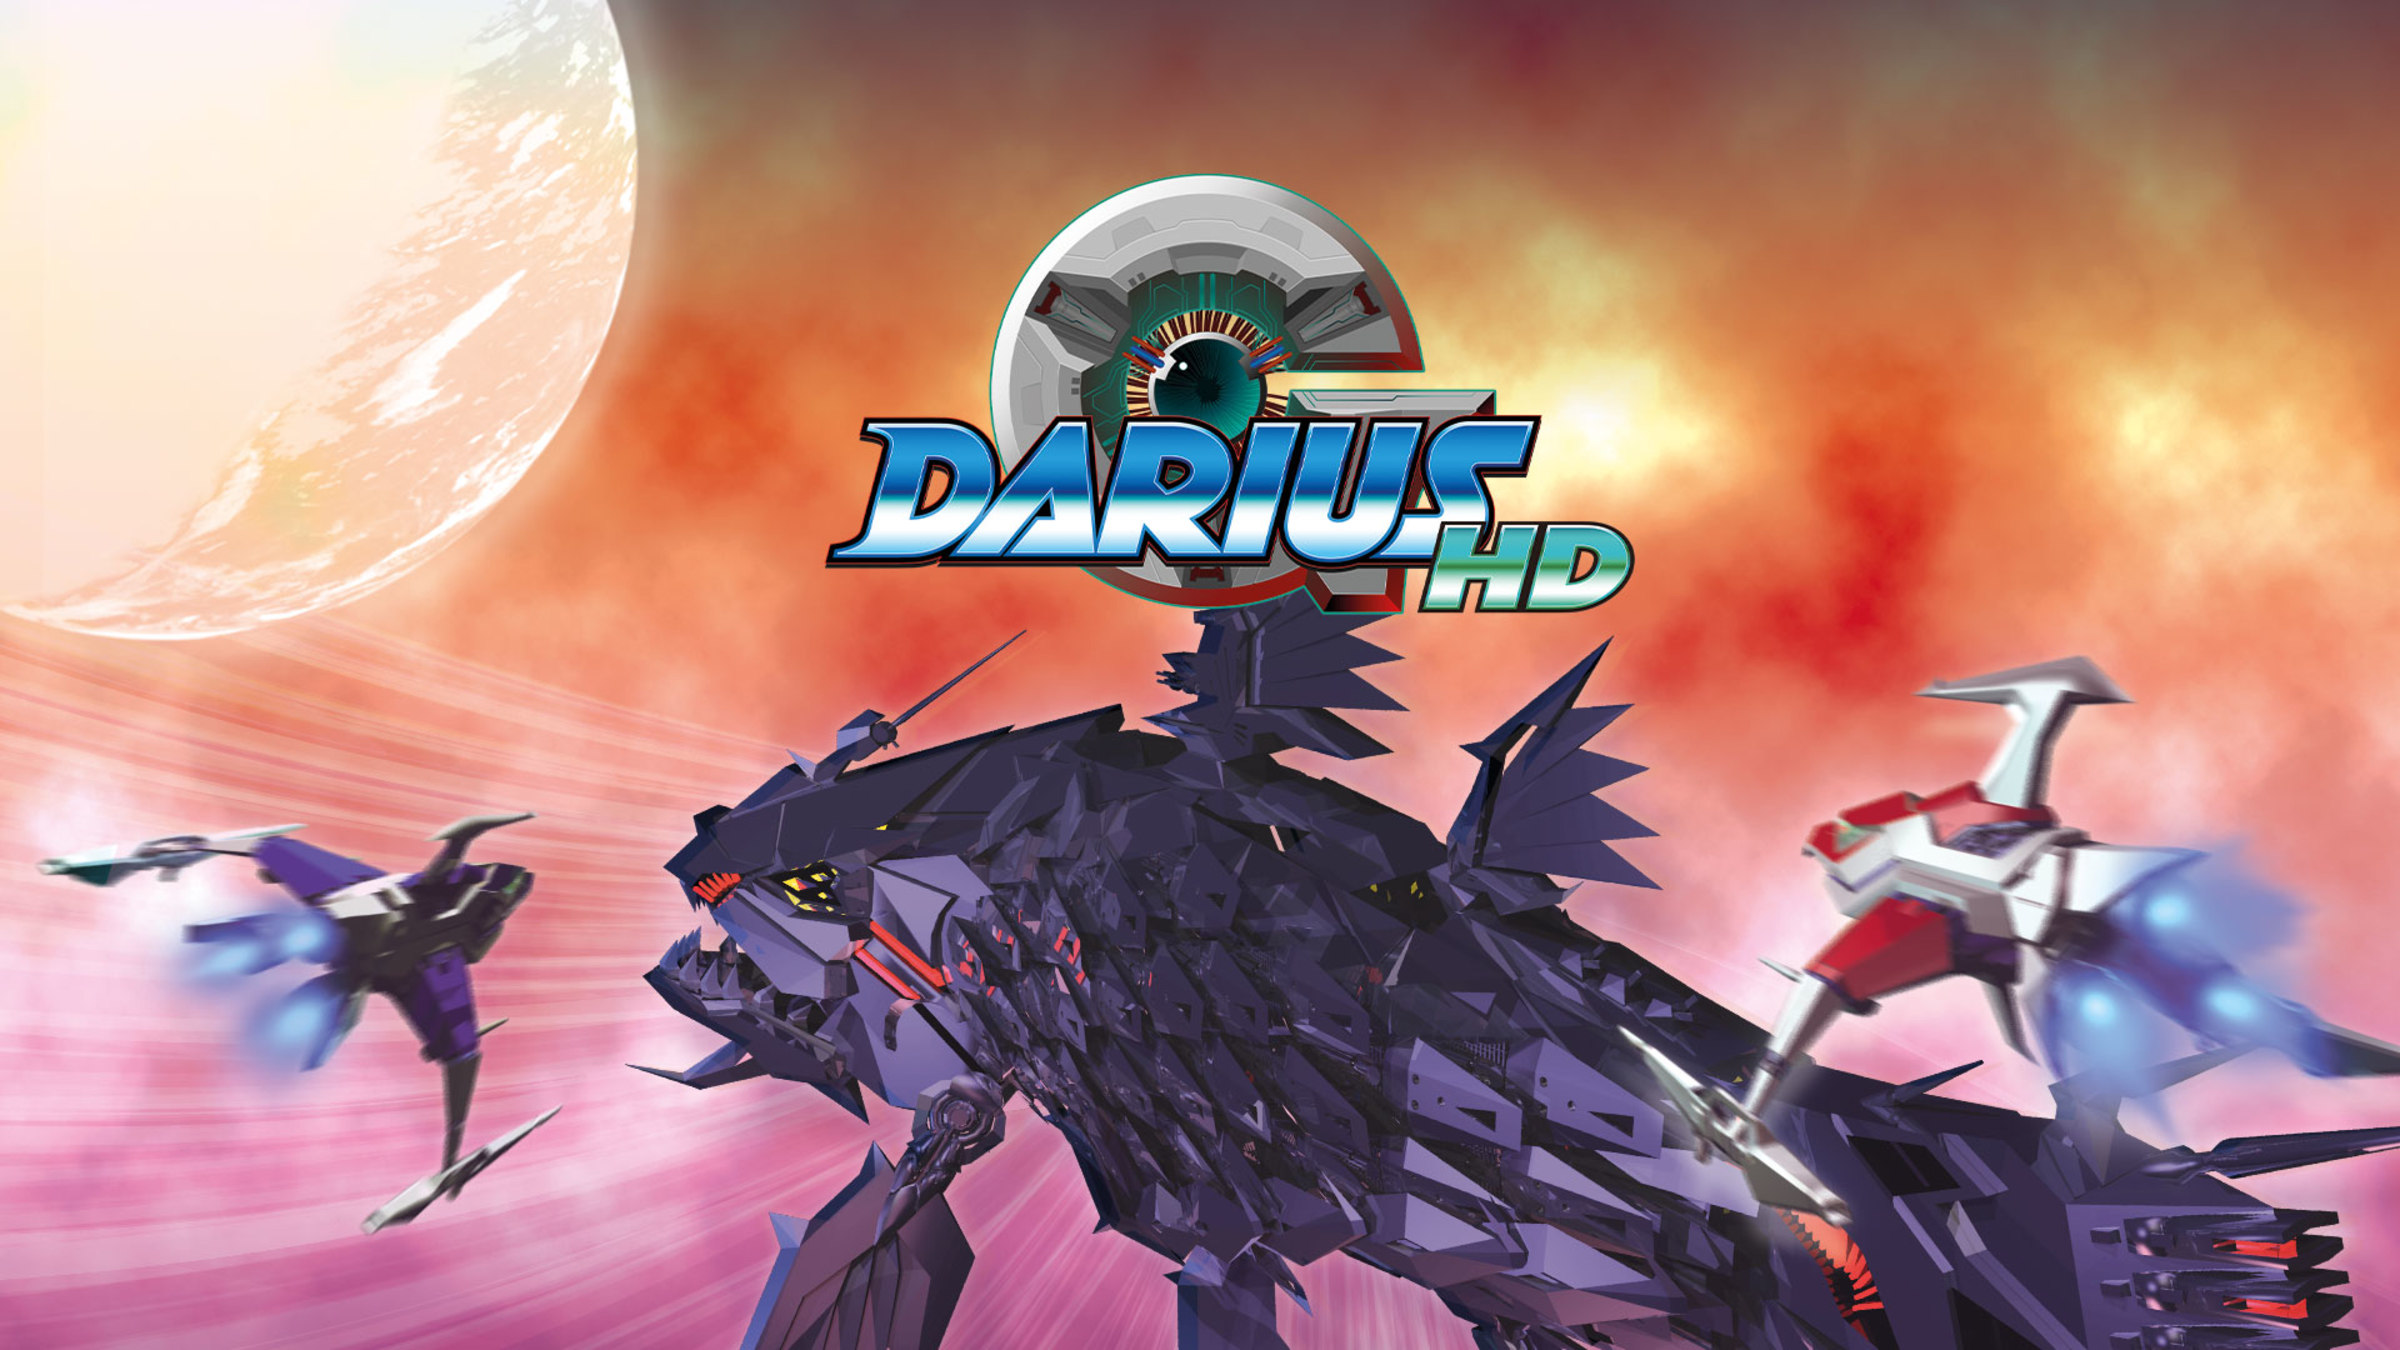 G-DARIUS HD for Nintendo Switch - Nintendo Official Site